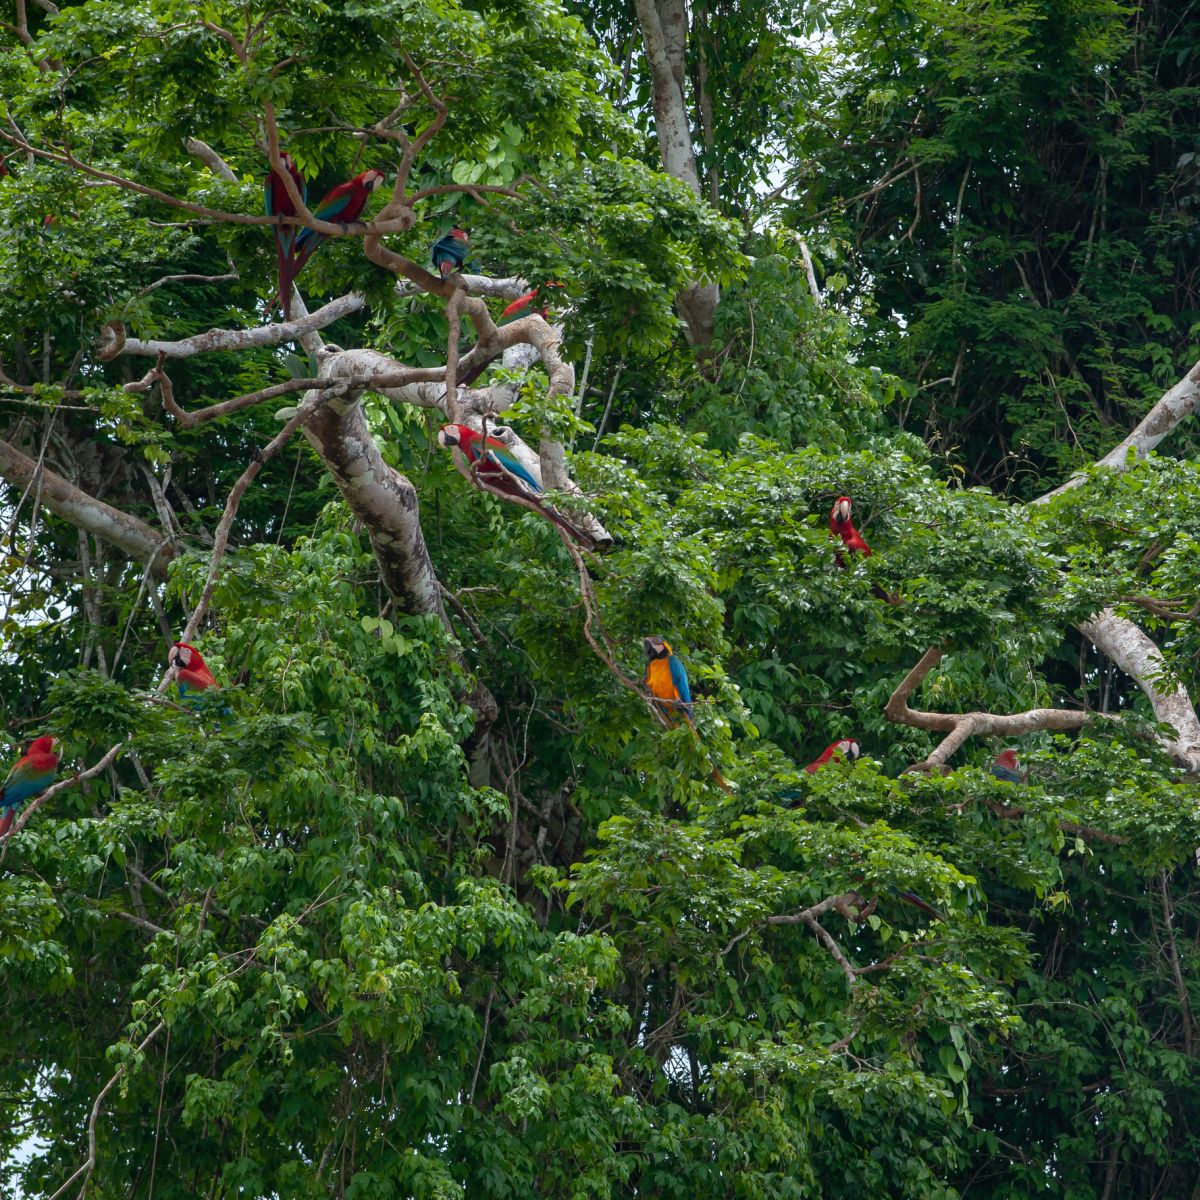 Macaws in trees in Tambopata Reserve, Peruvian Amazon rainforest